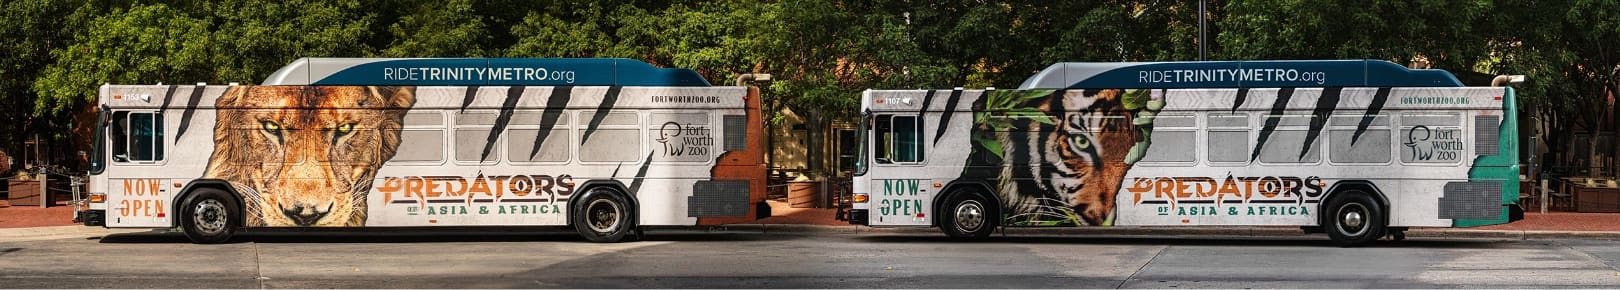 Predators Exhibit at the Fort Worth Zoo Bus Wrap